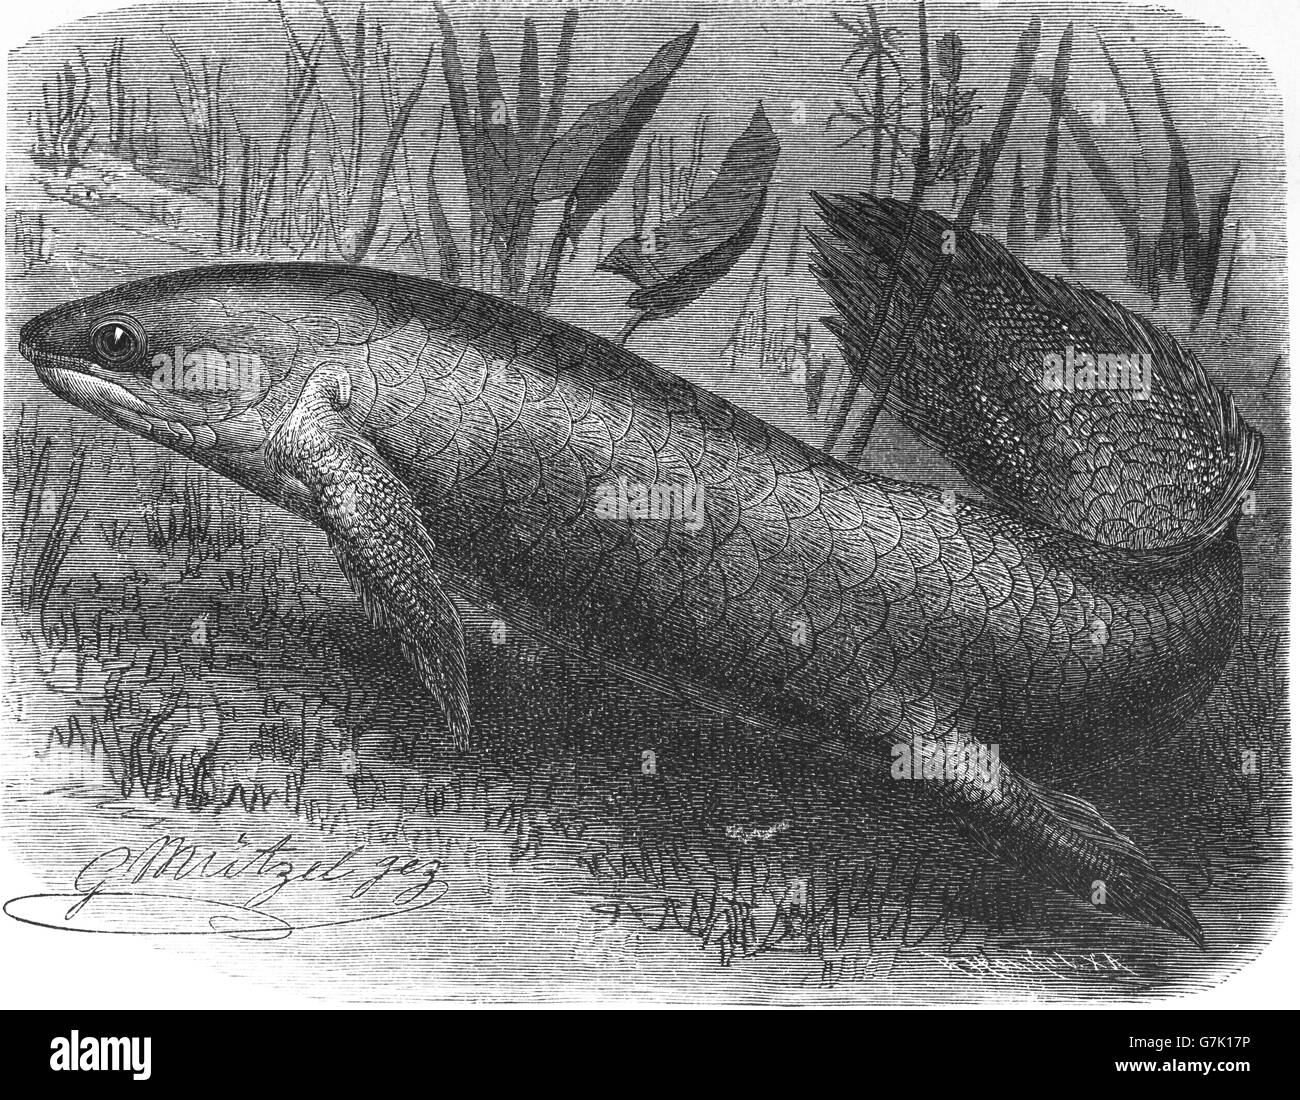 Queensland lungfish, Neoceratodus forsteri, Australian lungfish, Burnett salmon, barramunda, illustration from book dated 1904 Stock Photo